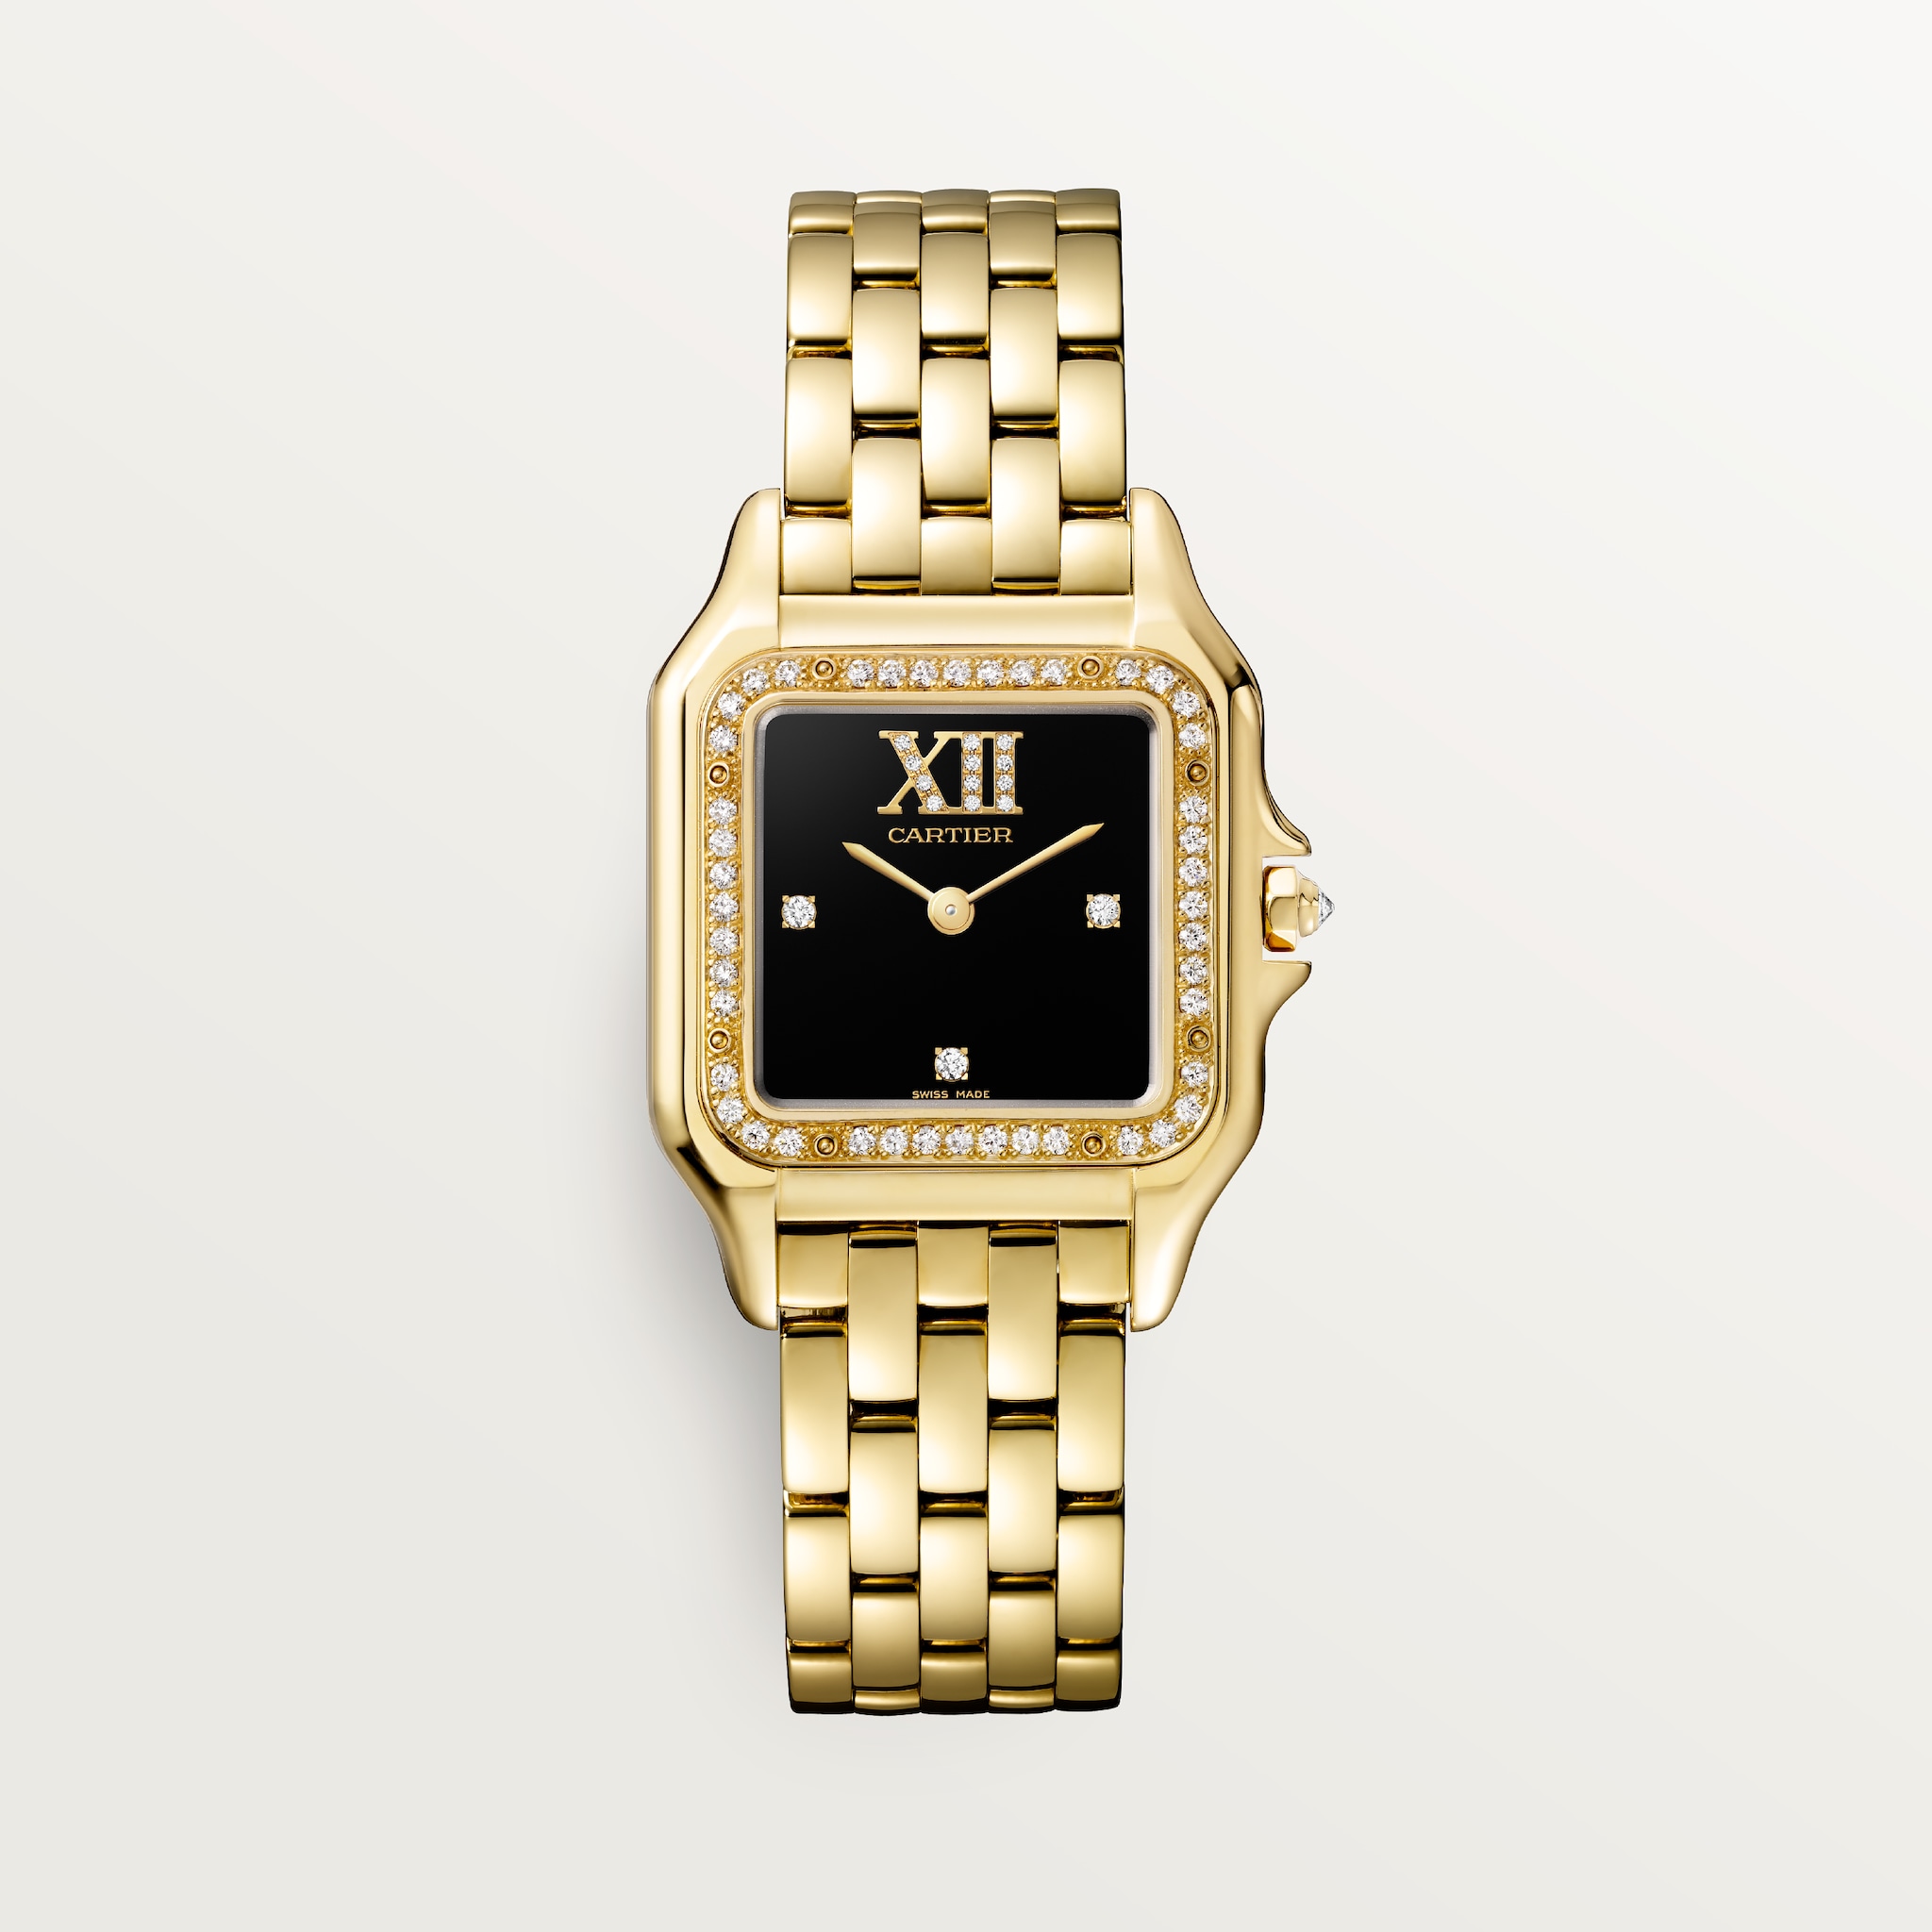 Panthère de Cartier watchMedium model, quartz movement, yellow gold, diamonds